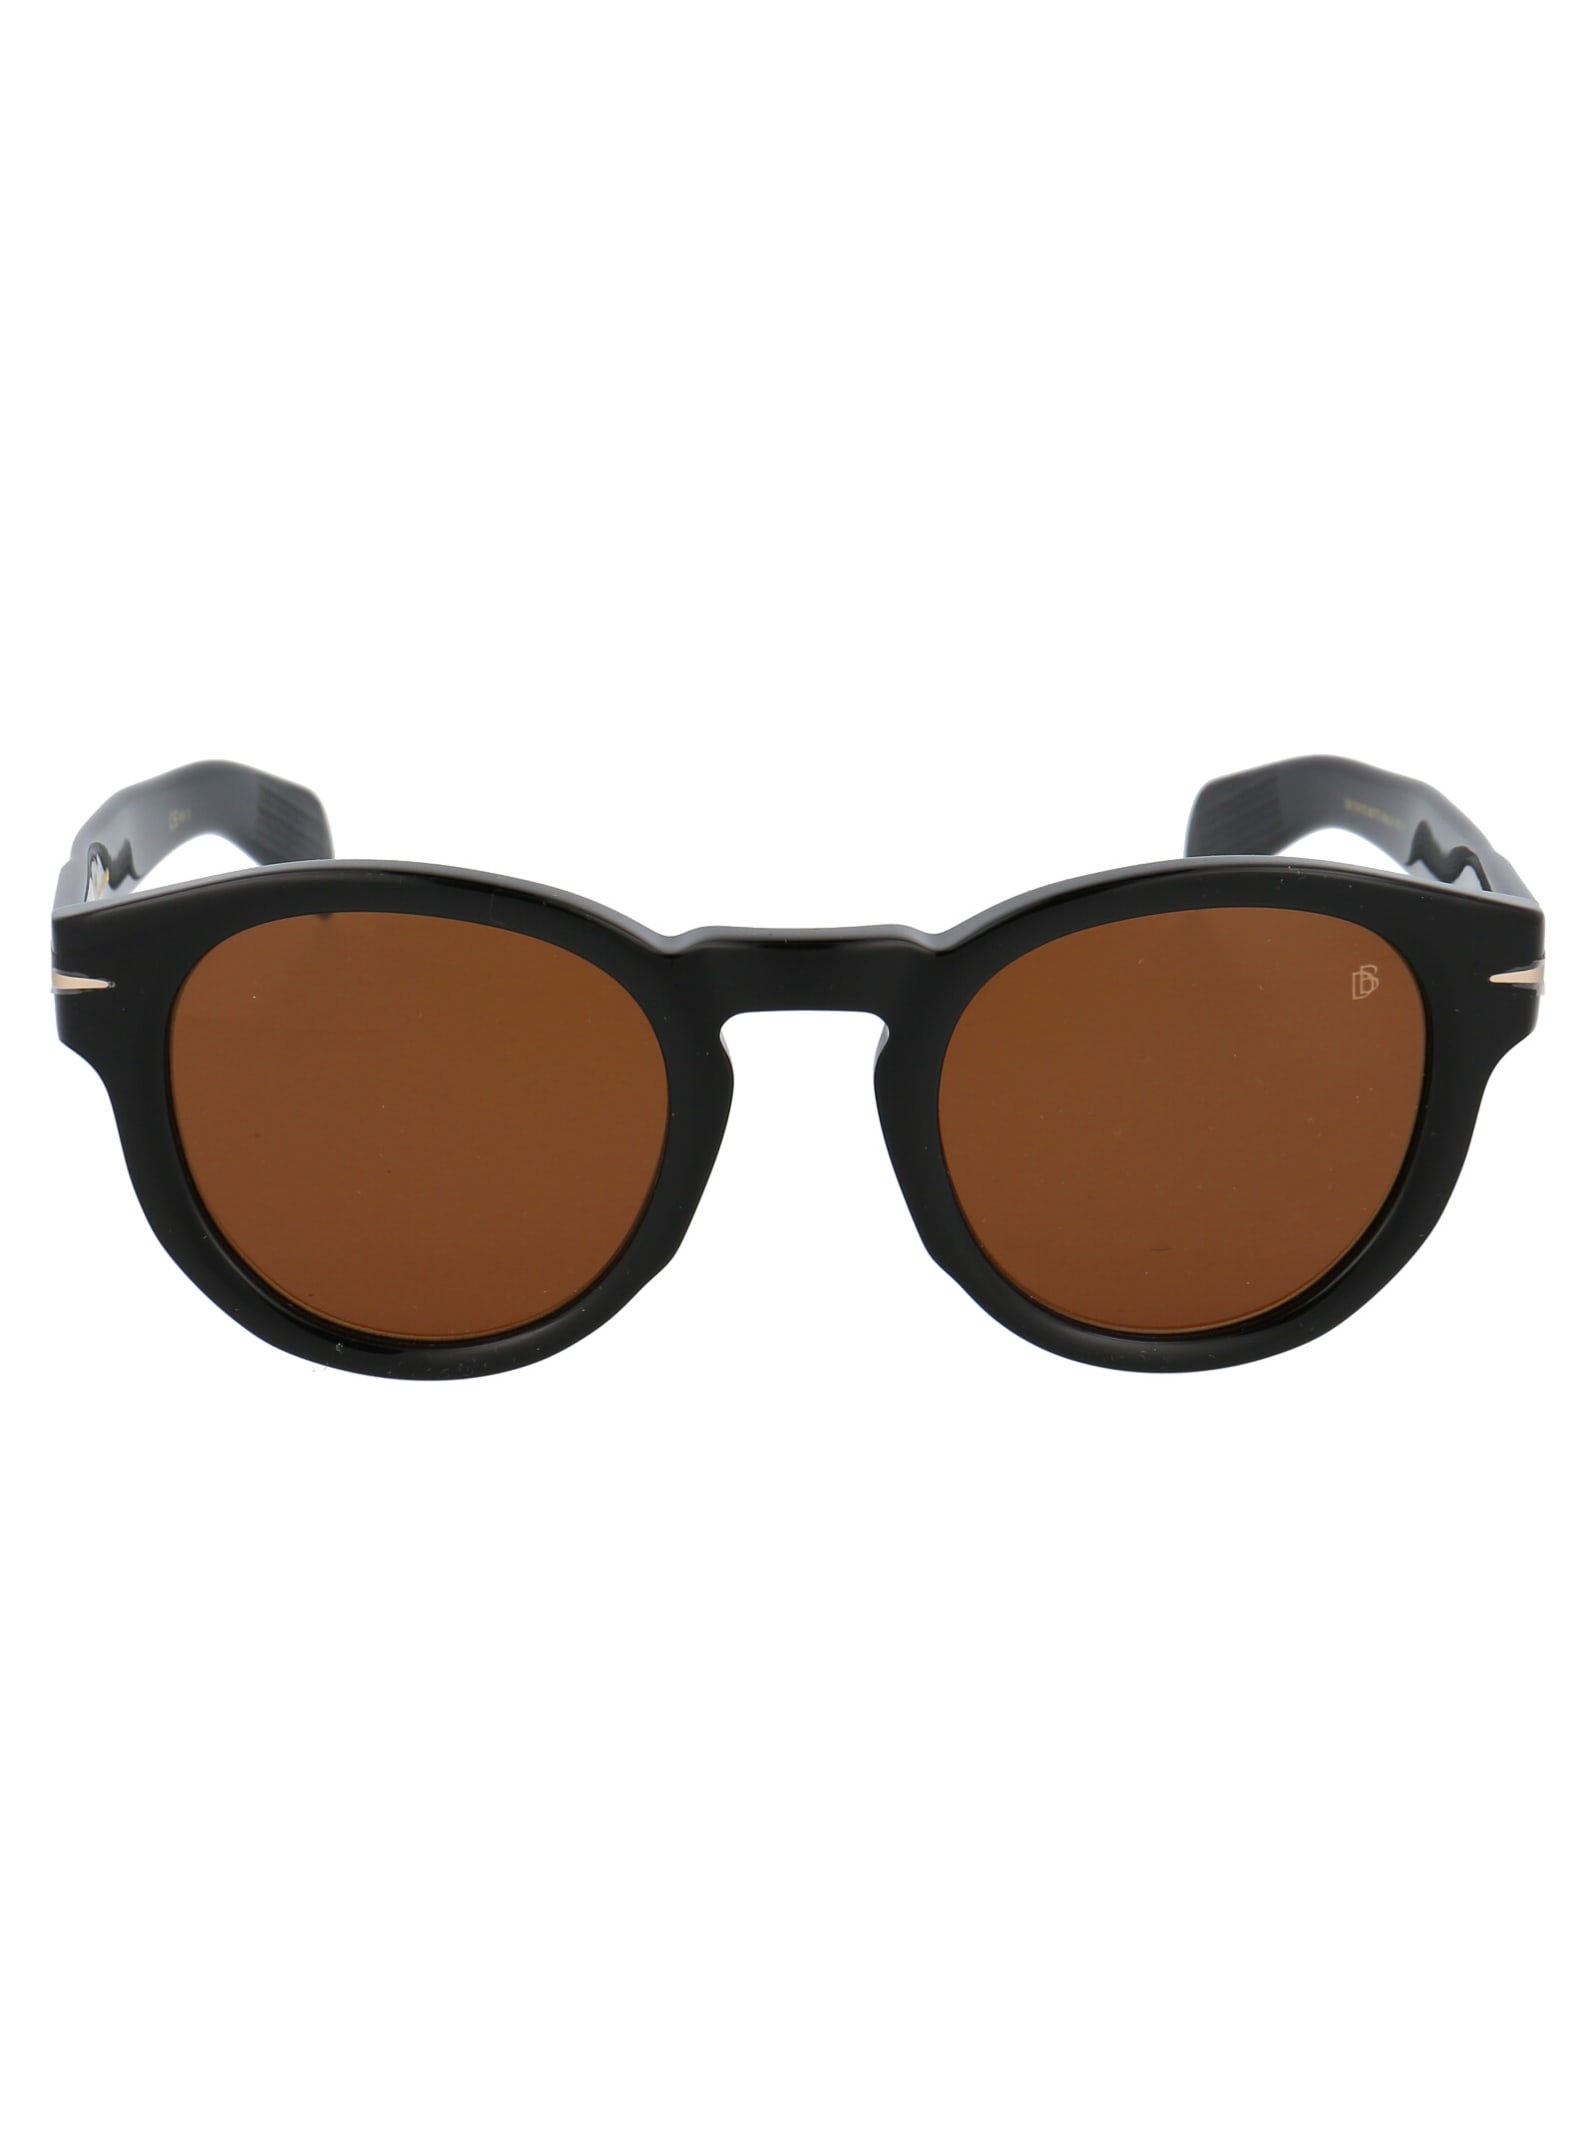 DB Eyewear by David Beckham Db 7041/s Sunglasses